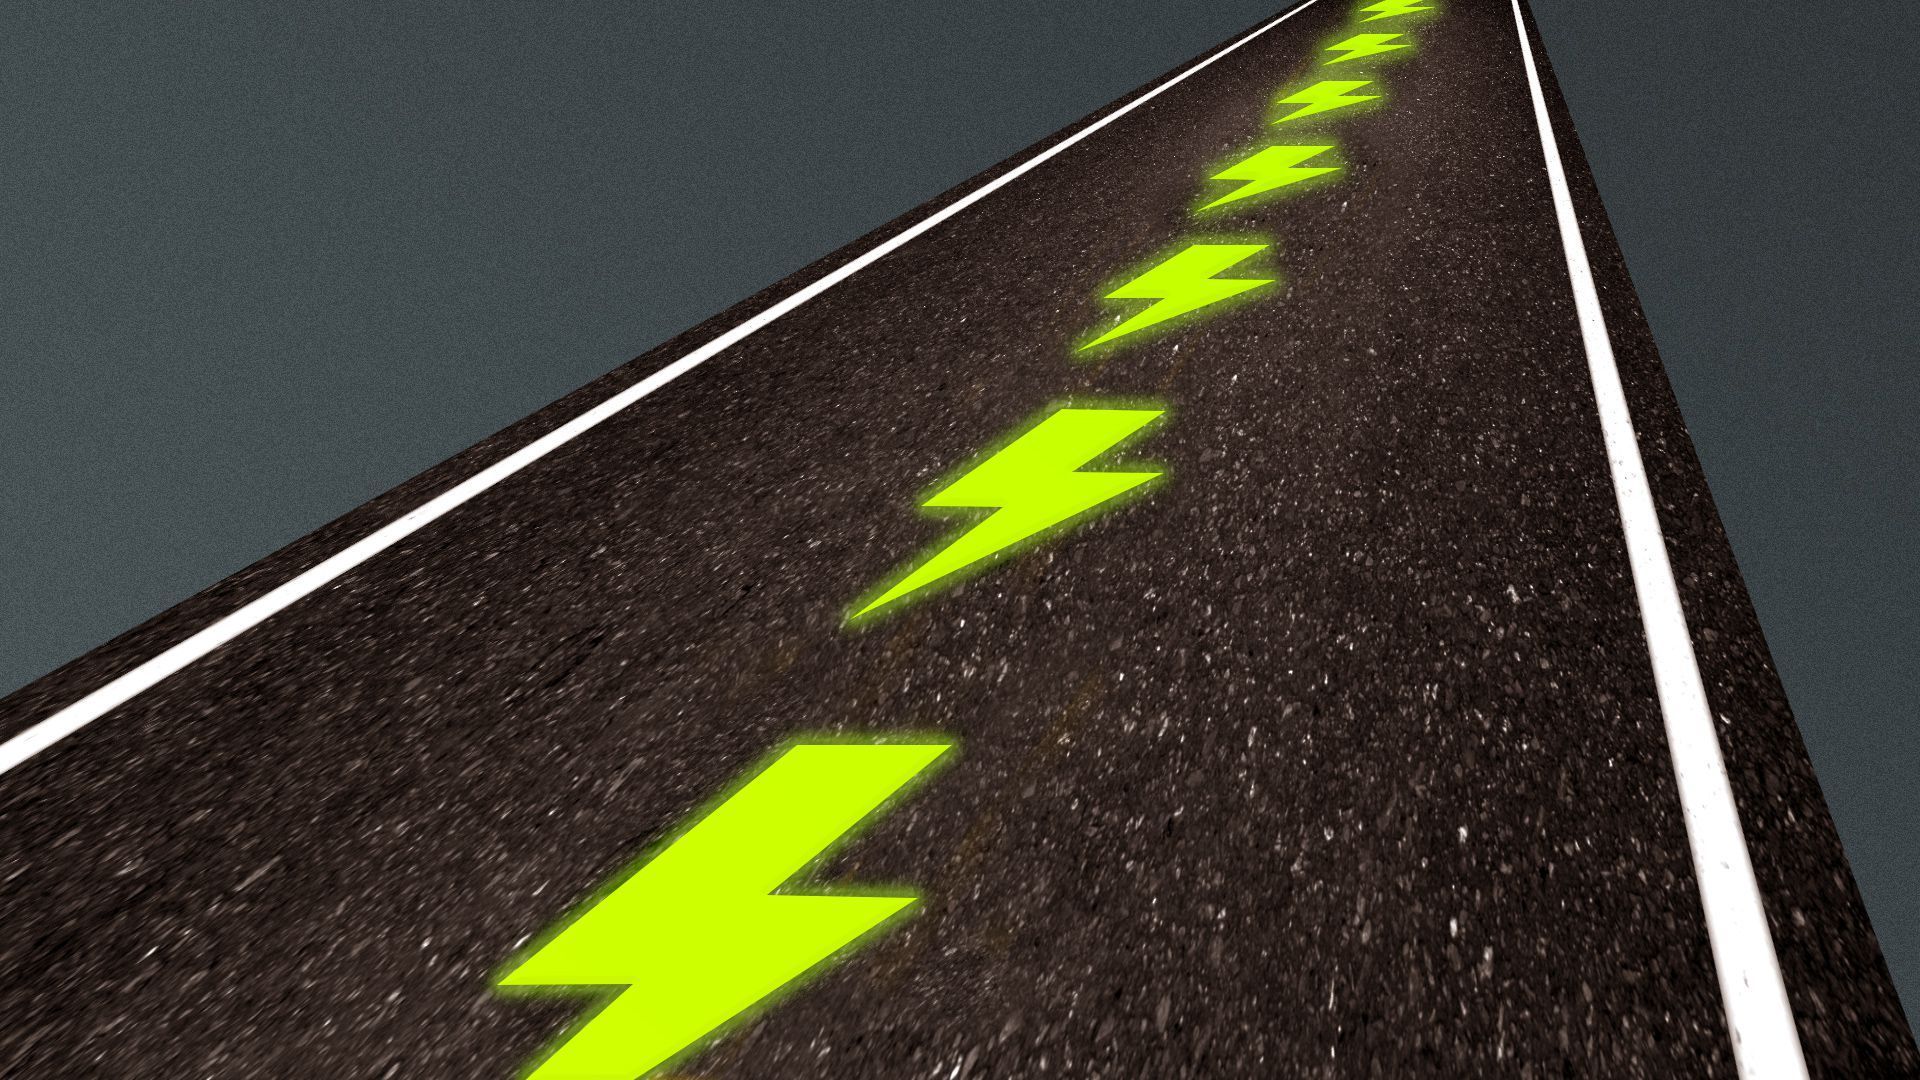 An illustration of lightning bolts along a road.